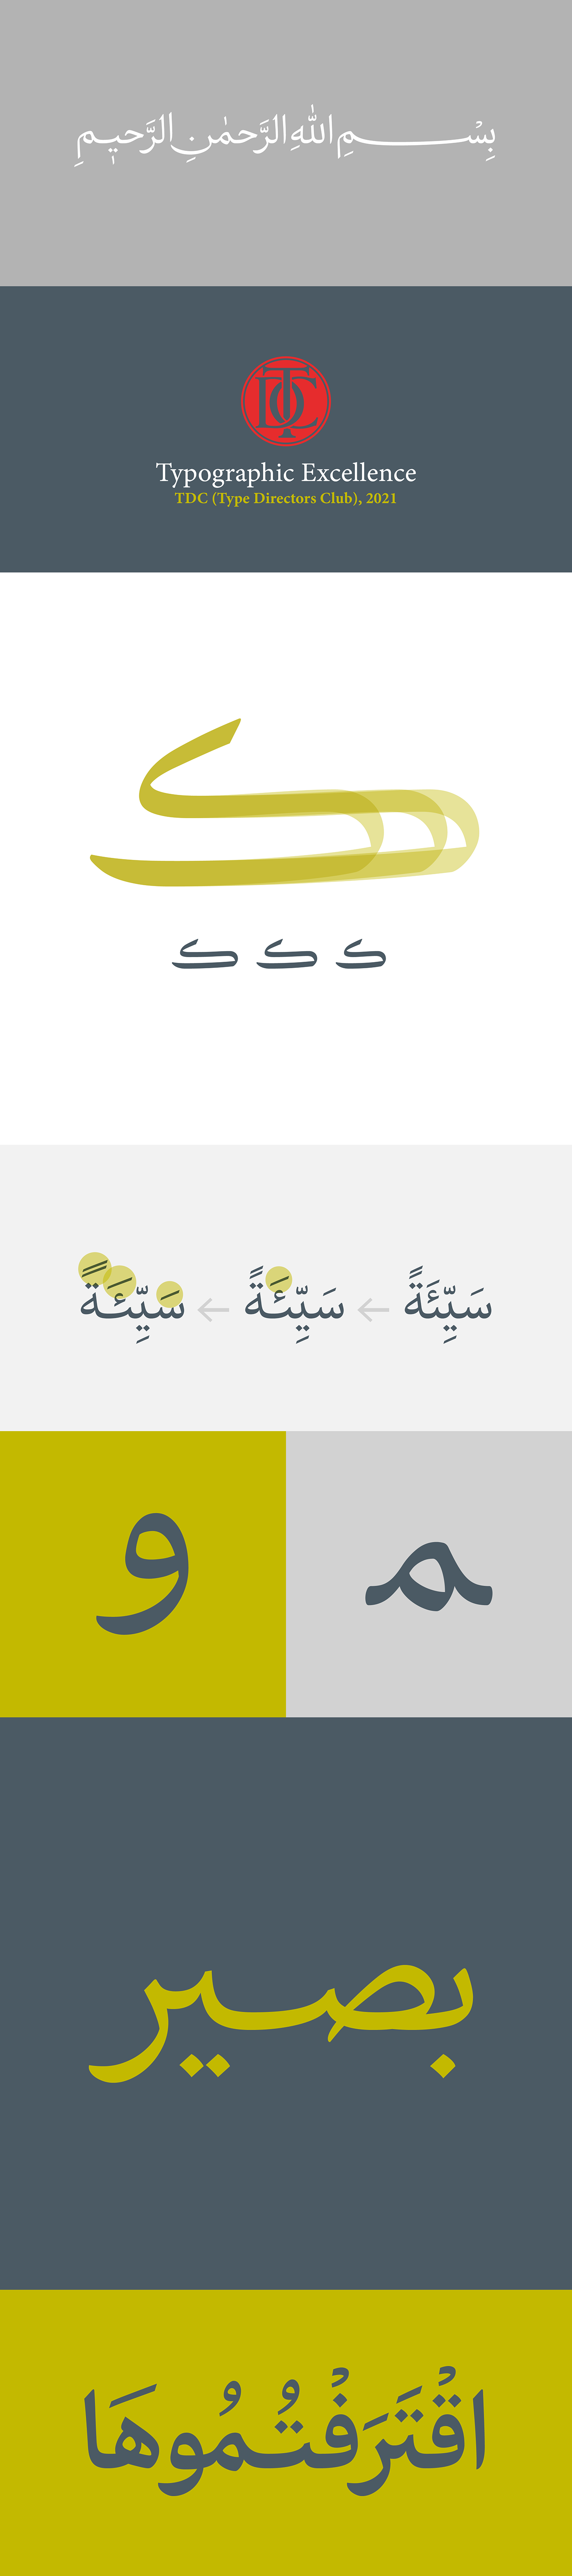 font Naskh qalam Quran type Typeface خط قرآن قلم فونت  